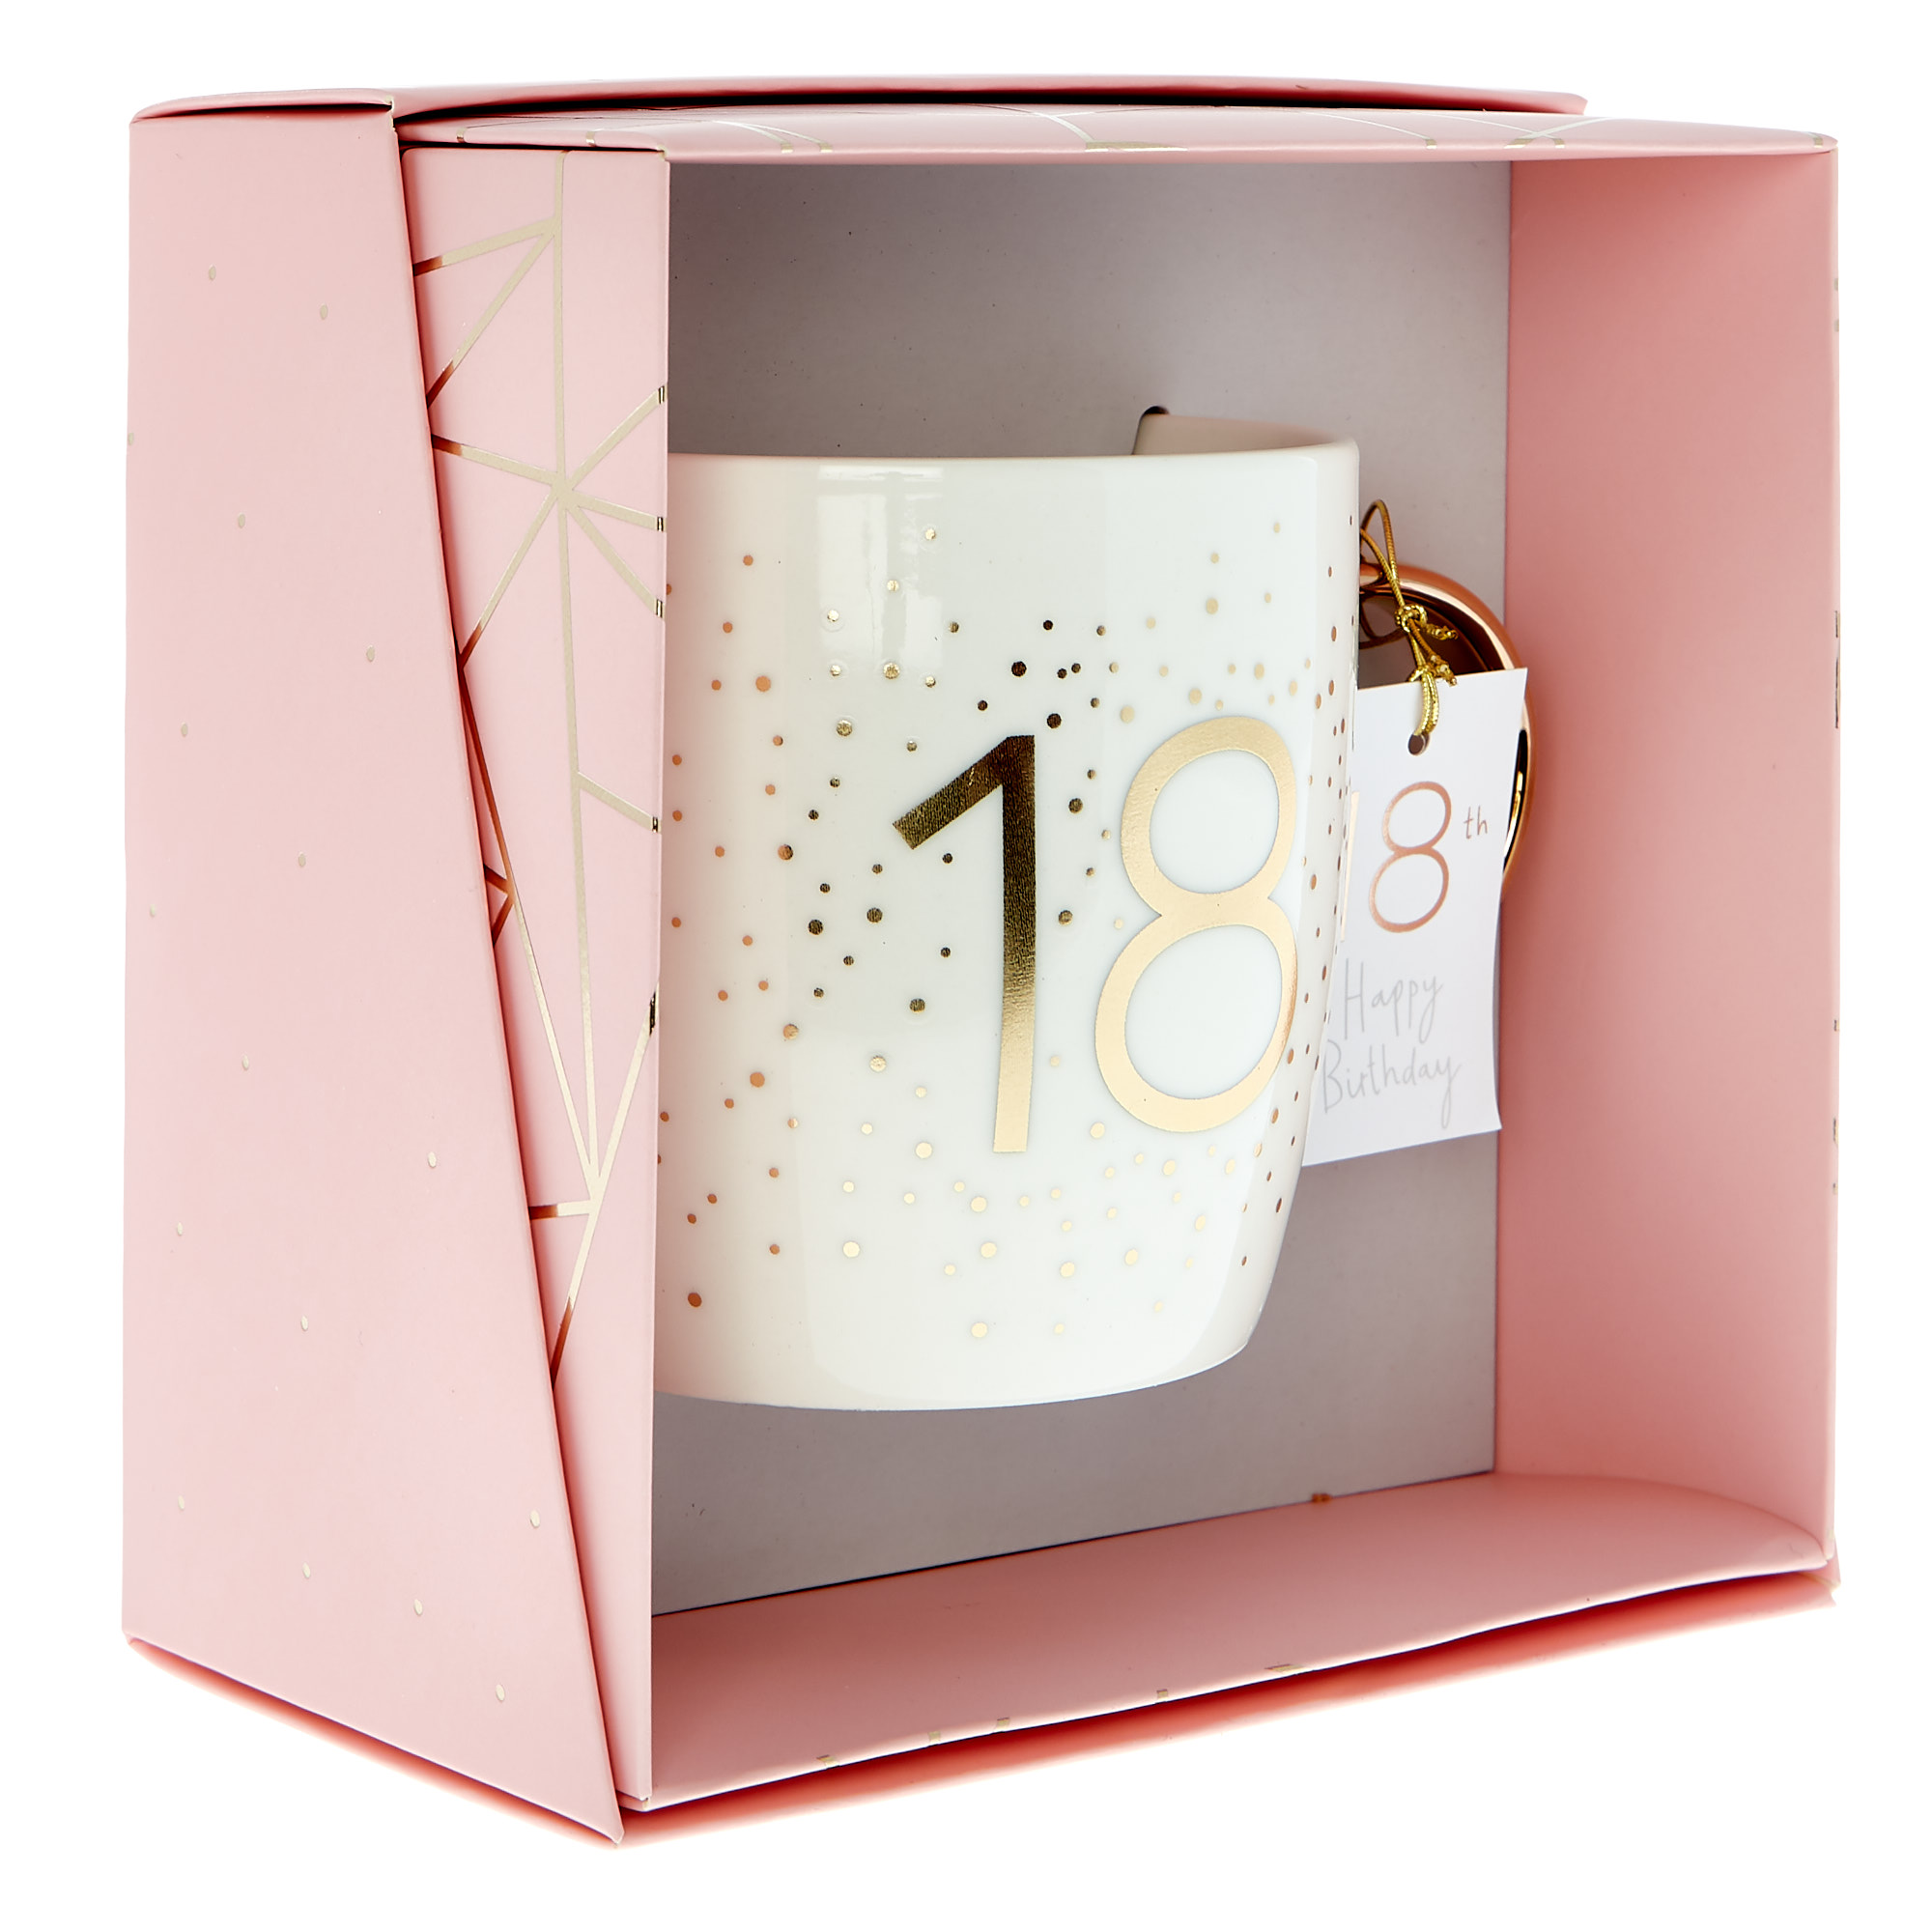 18th Birthday Mug In A Box - Happy Birthday To You